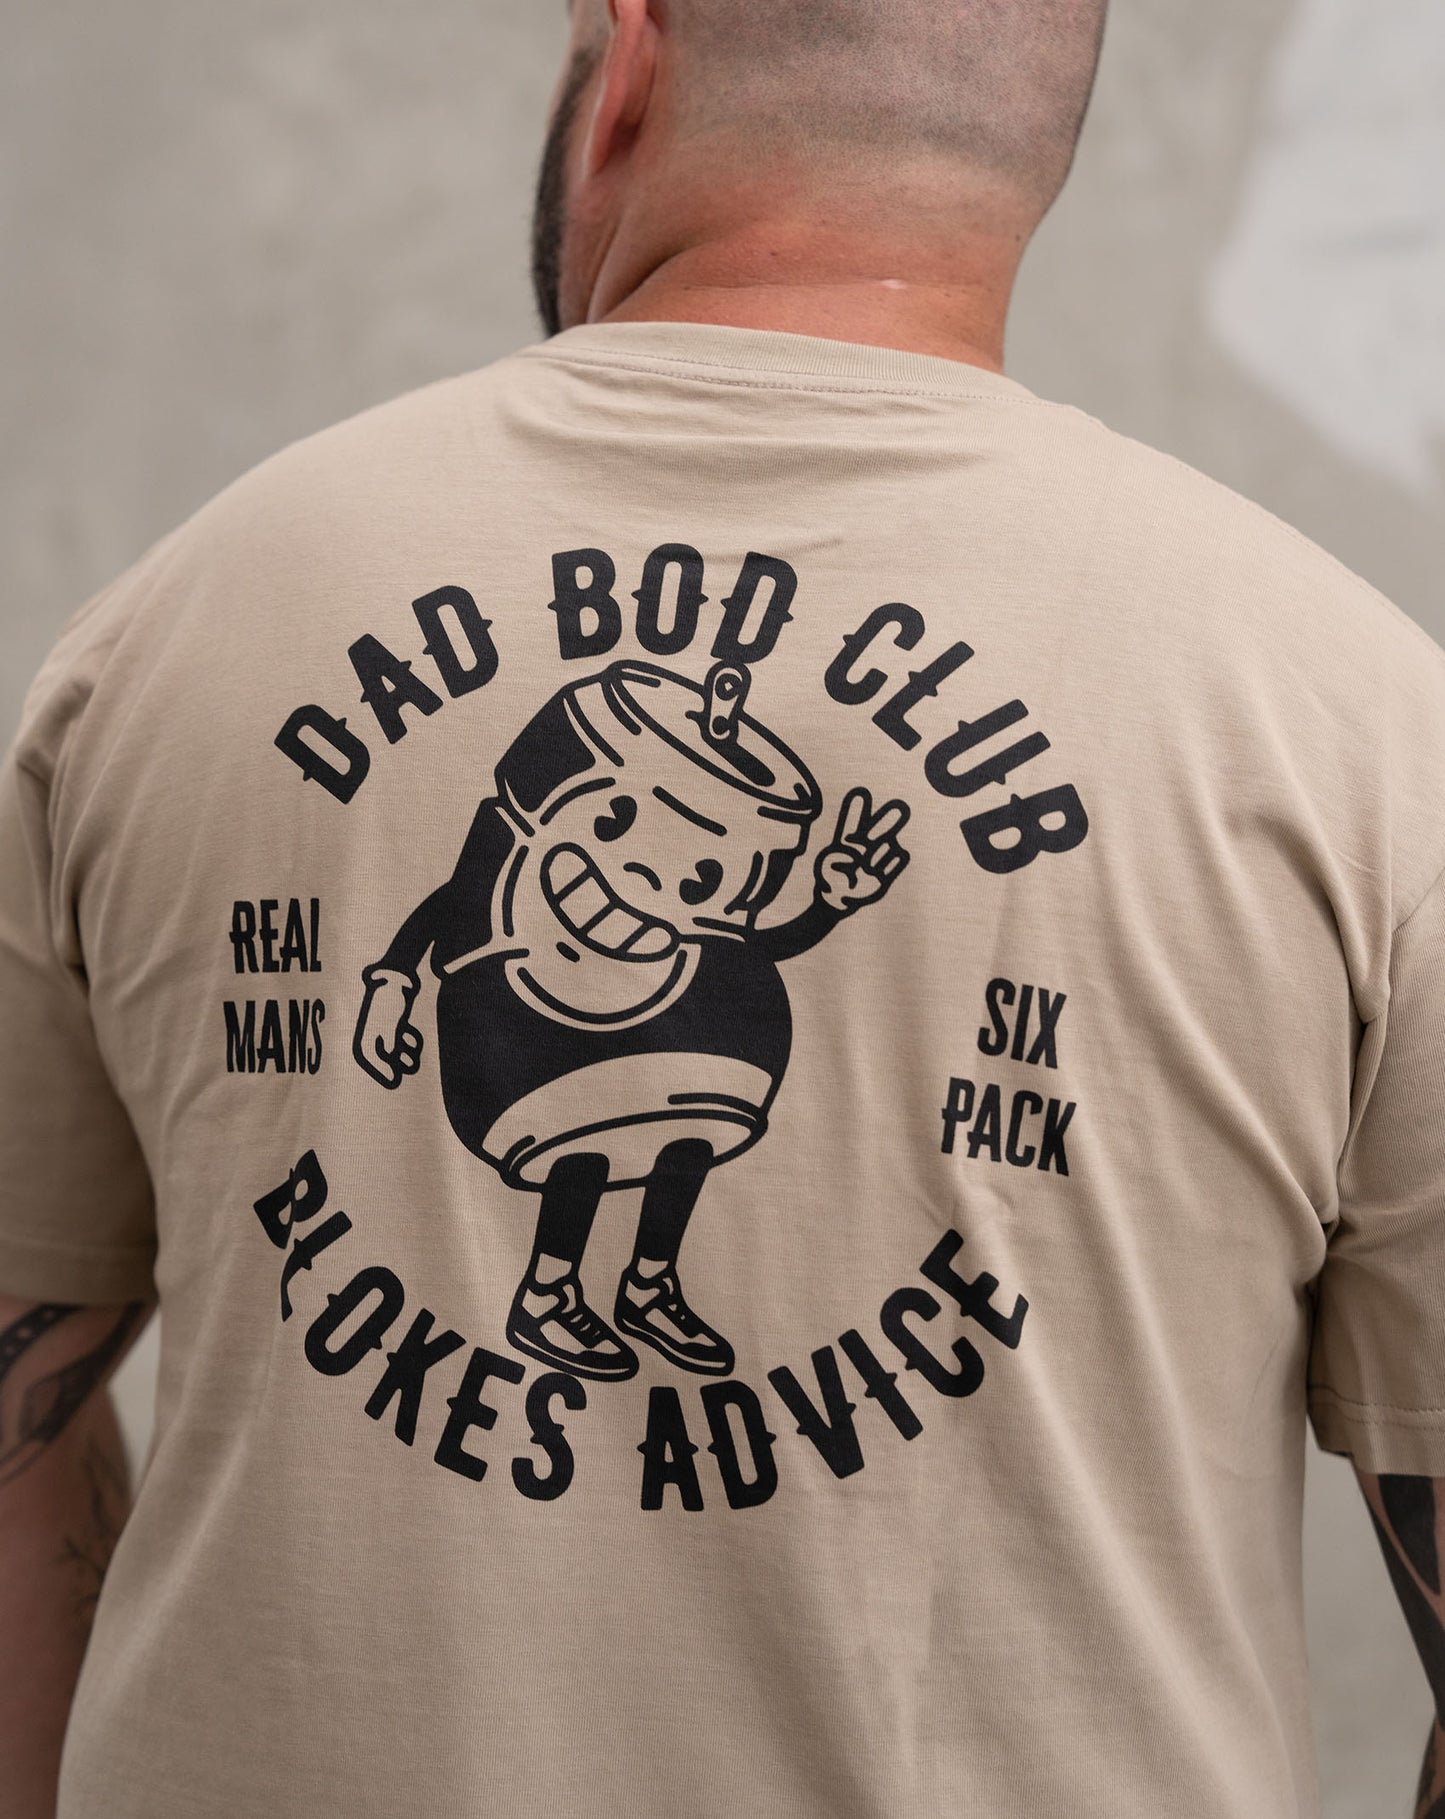 Dad Bod Club Tee - Sand